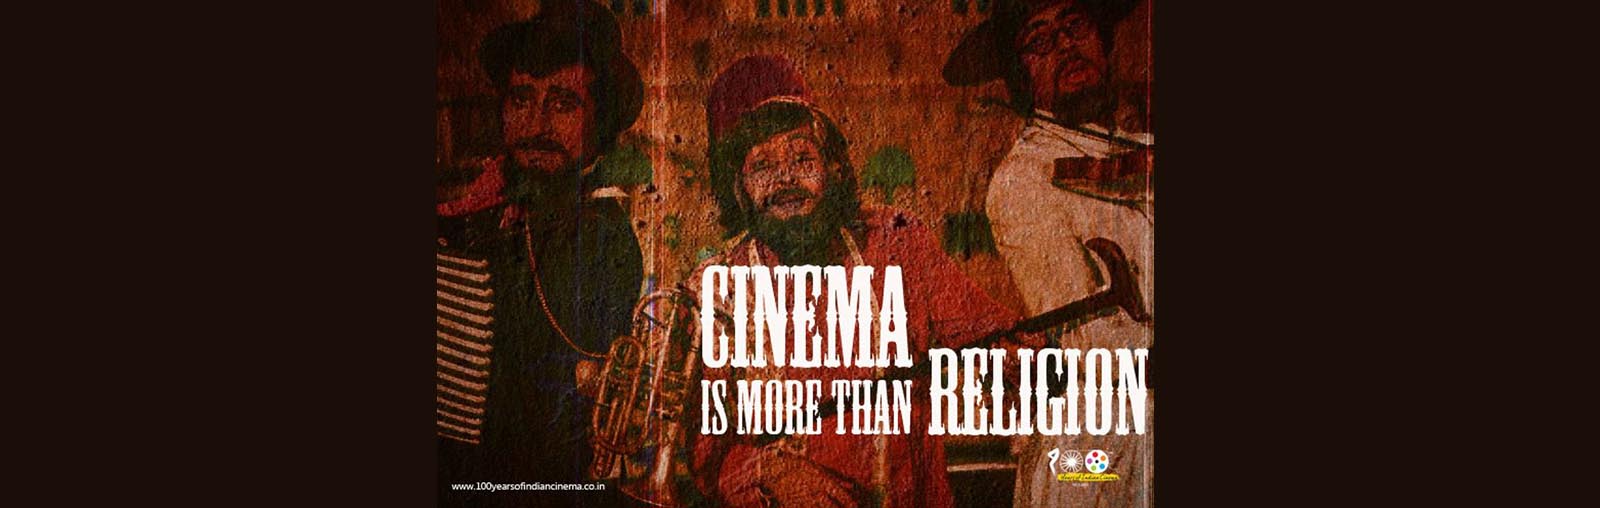 Cinema is more than religion by Manoj Mauryaa